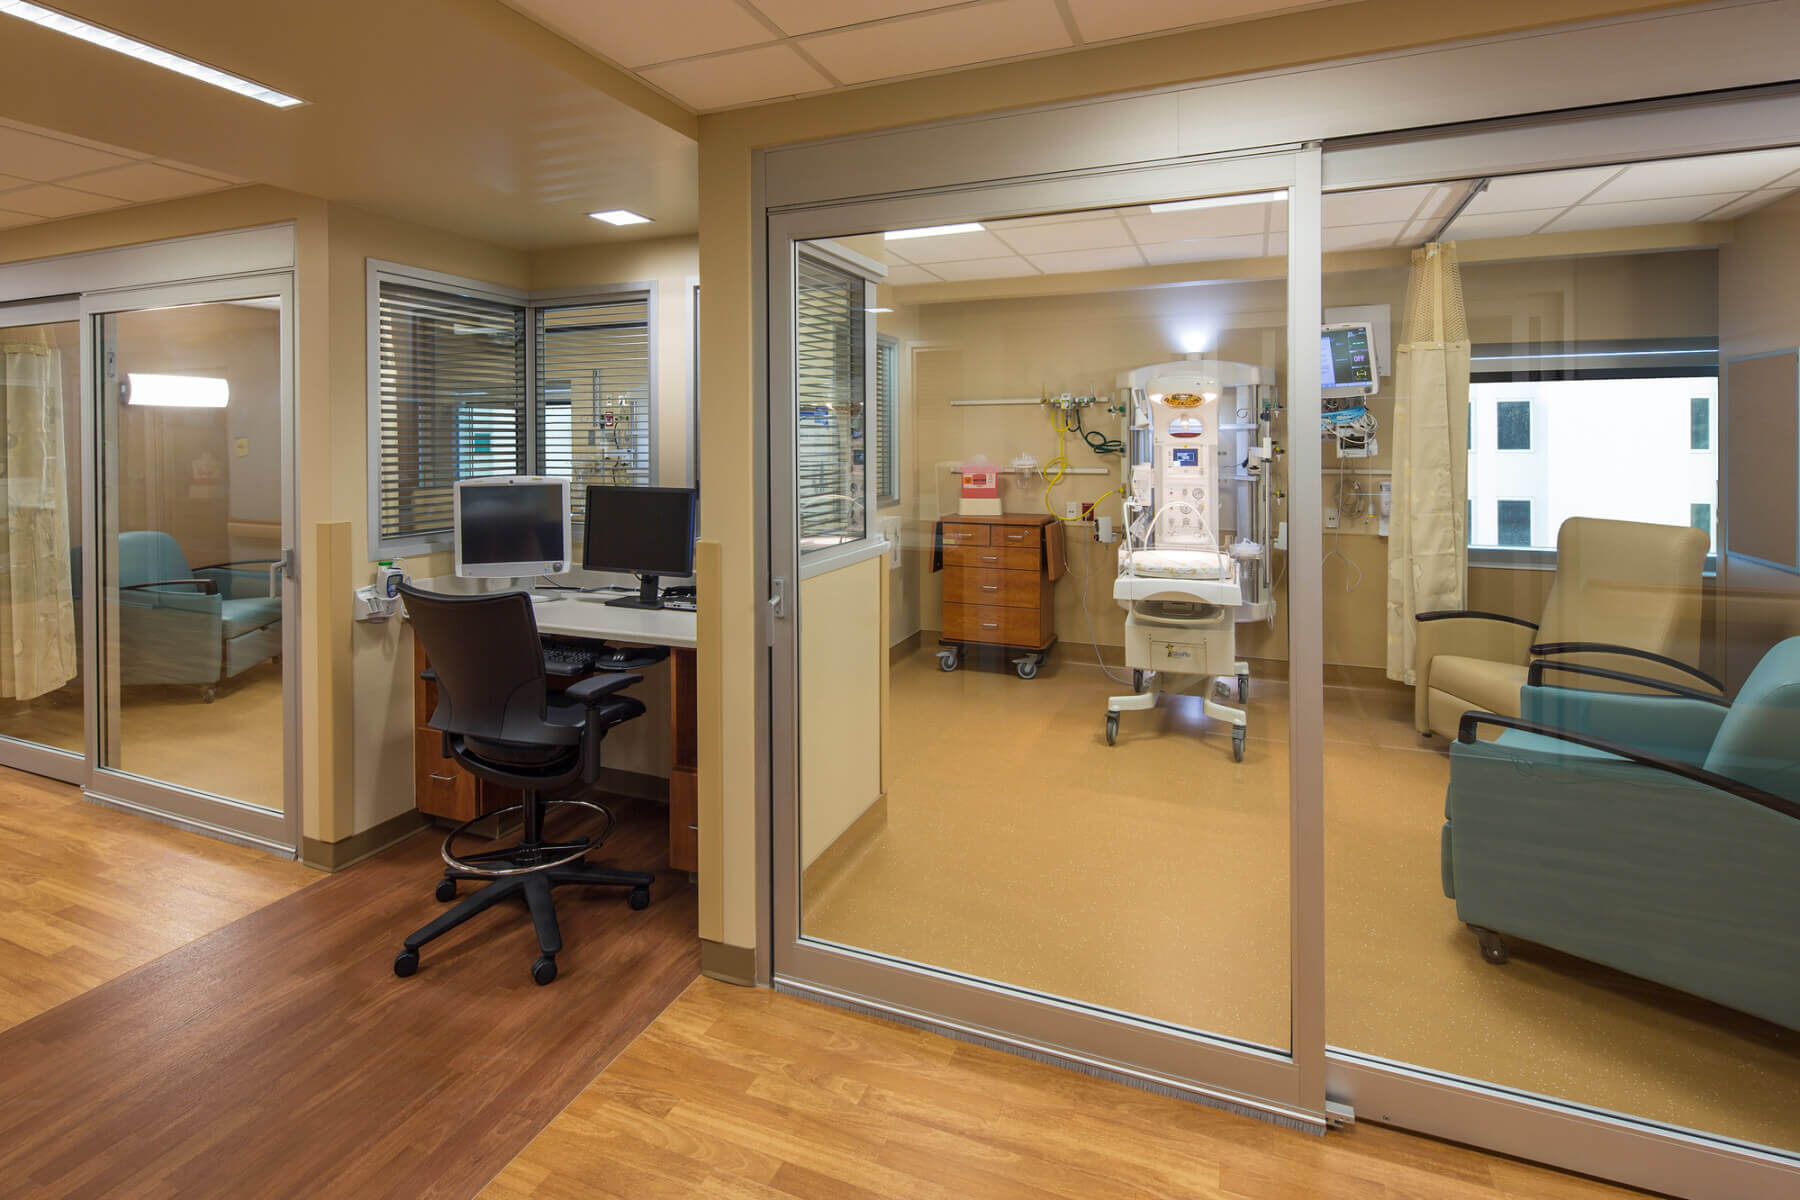 neonatal intensive care patient room in the inpatient tower at Sarasota Memorial Hospital